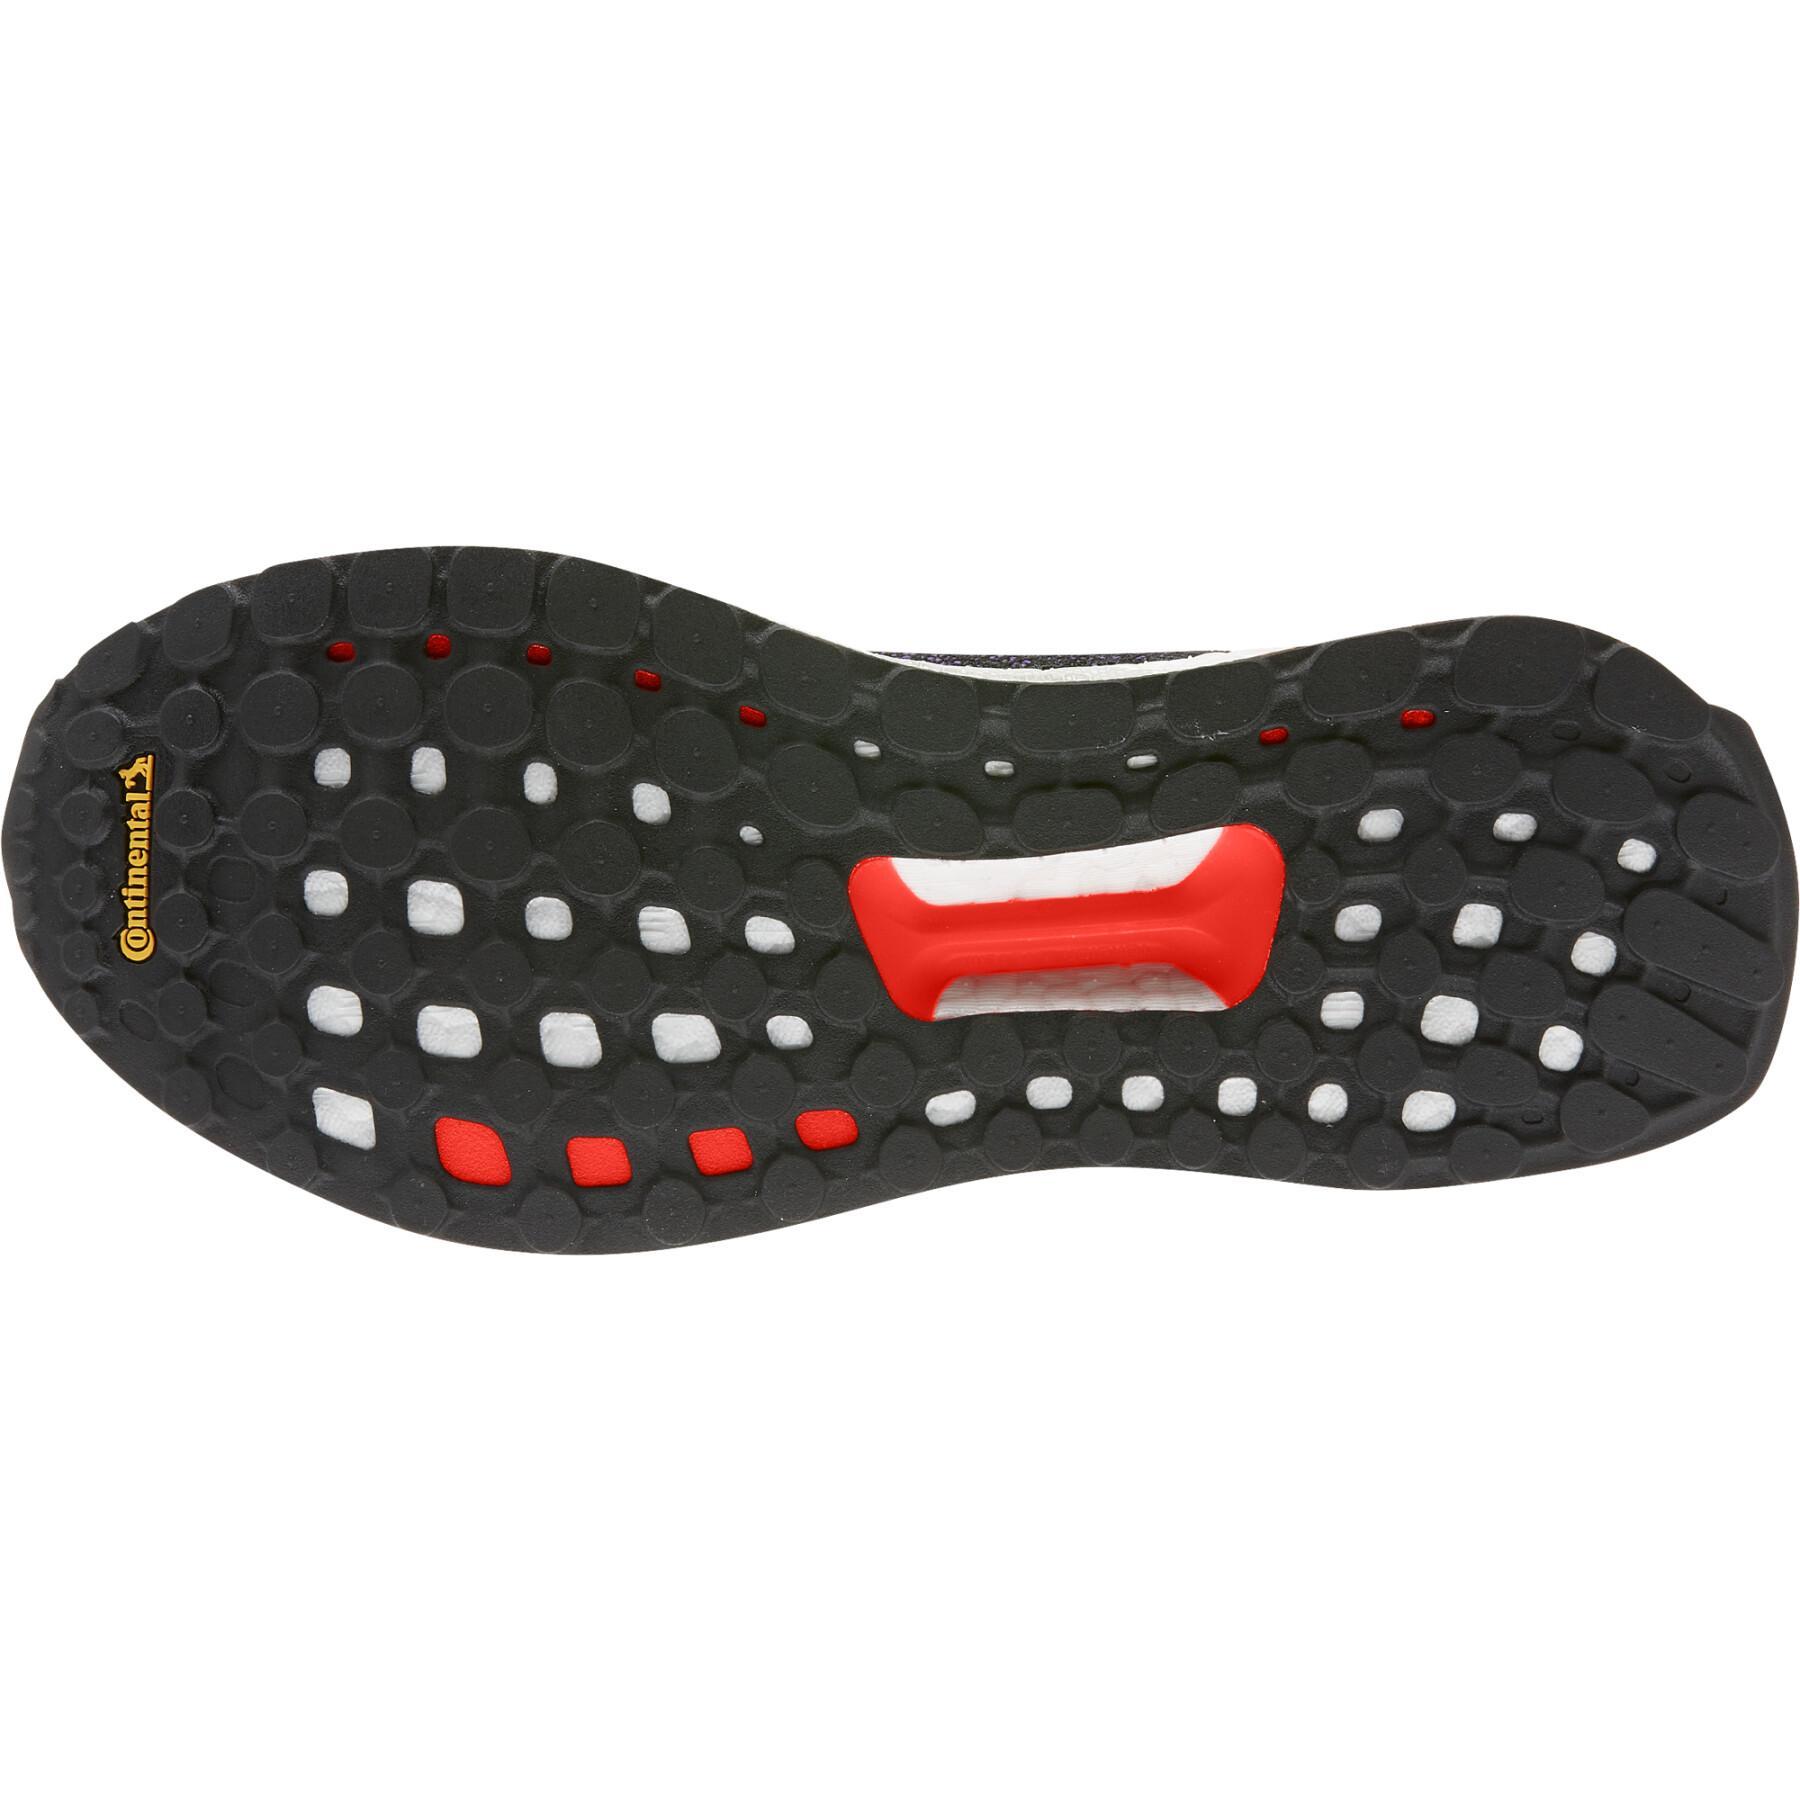 Sapatos de corrida para mulheres adidas Solarboost ST 19